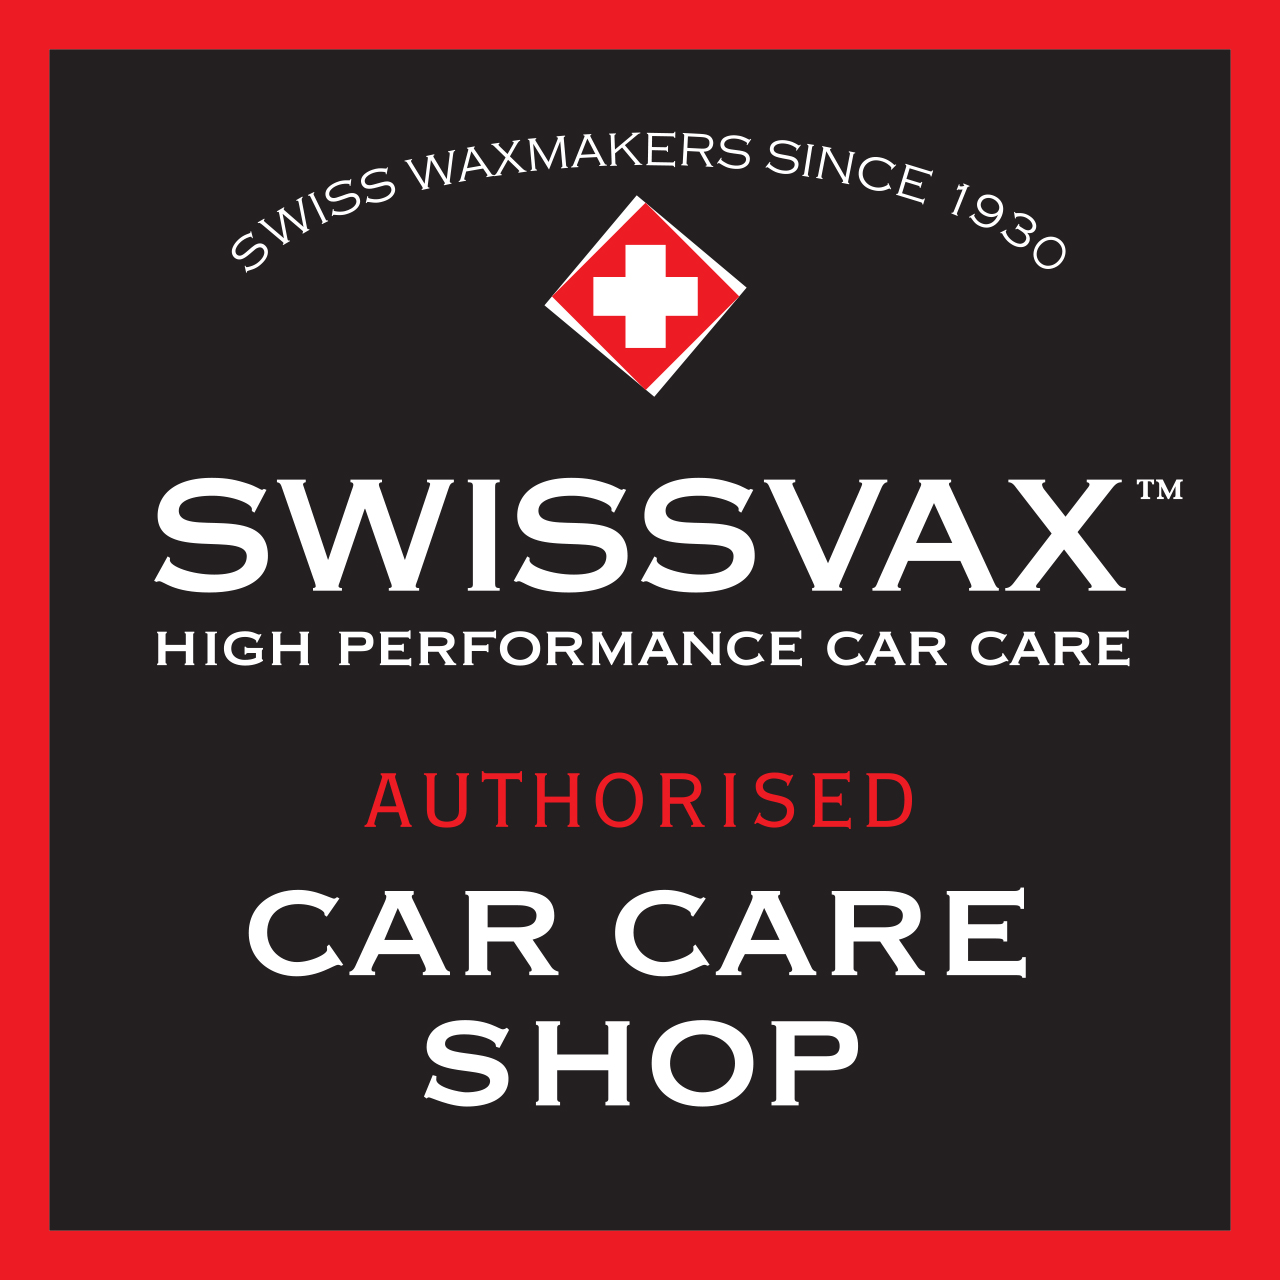 Swissvax authorized Car Care